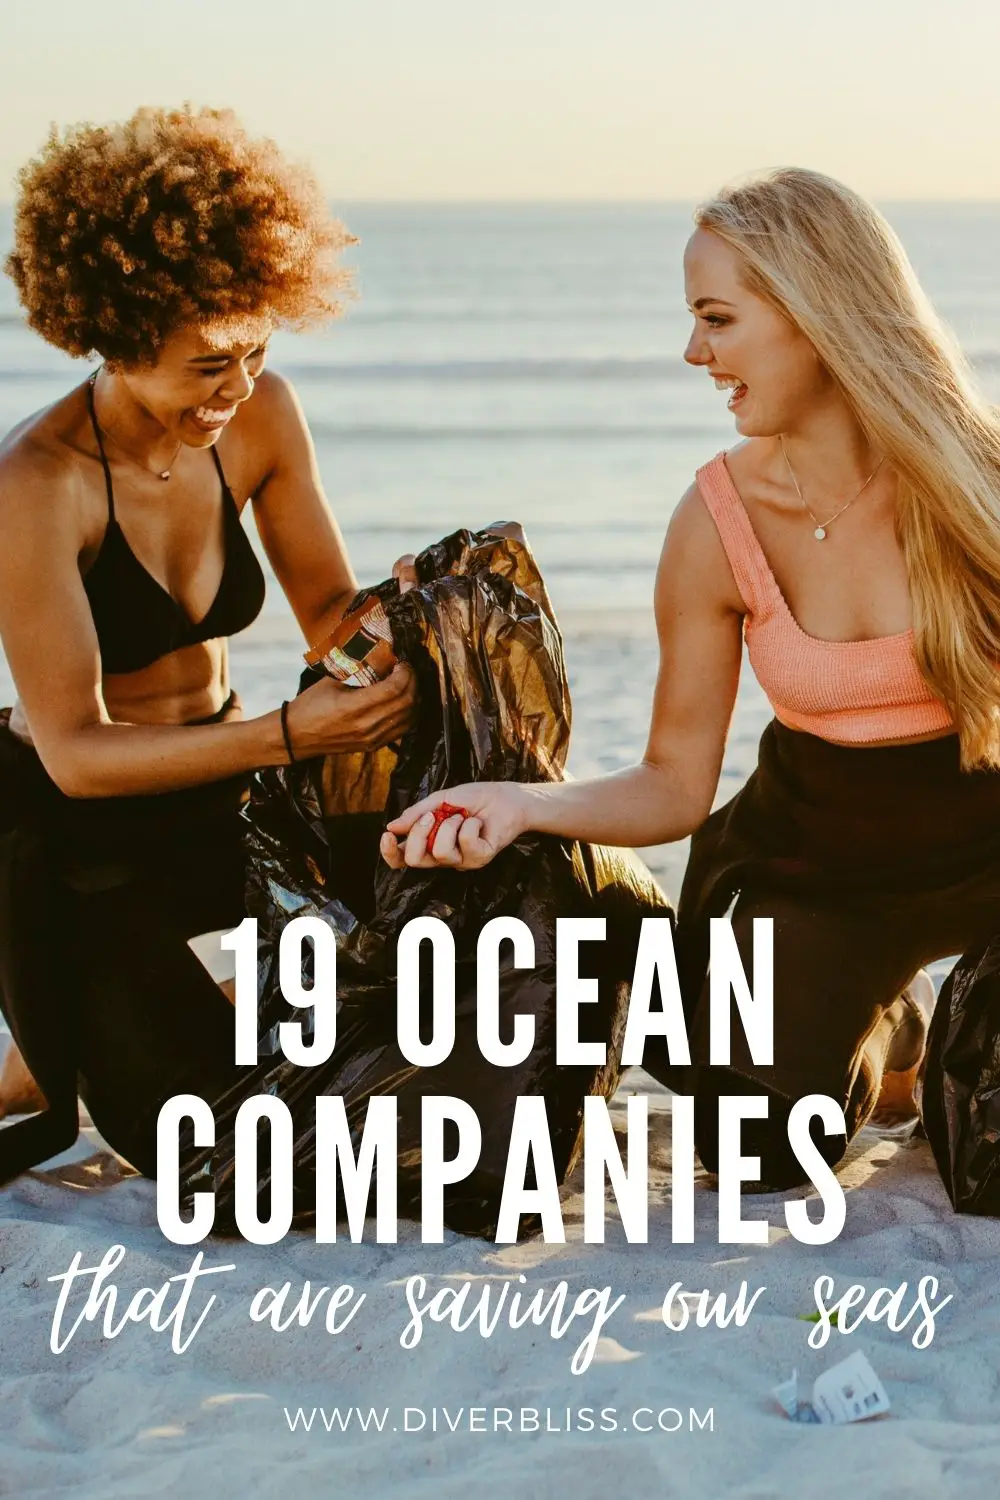 19 Ocean Companies that are saving our seas